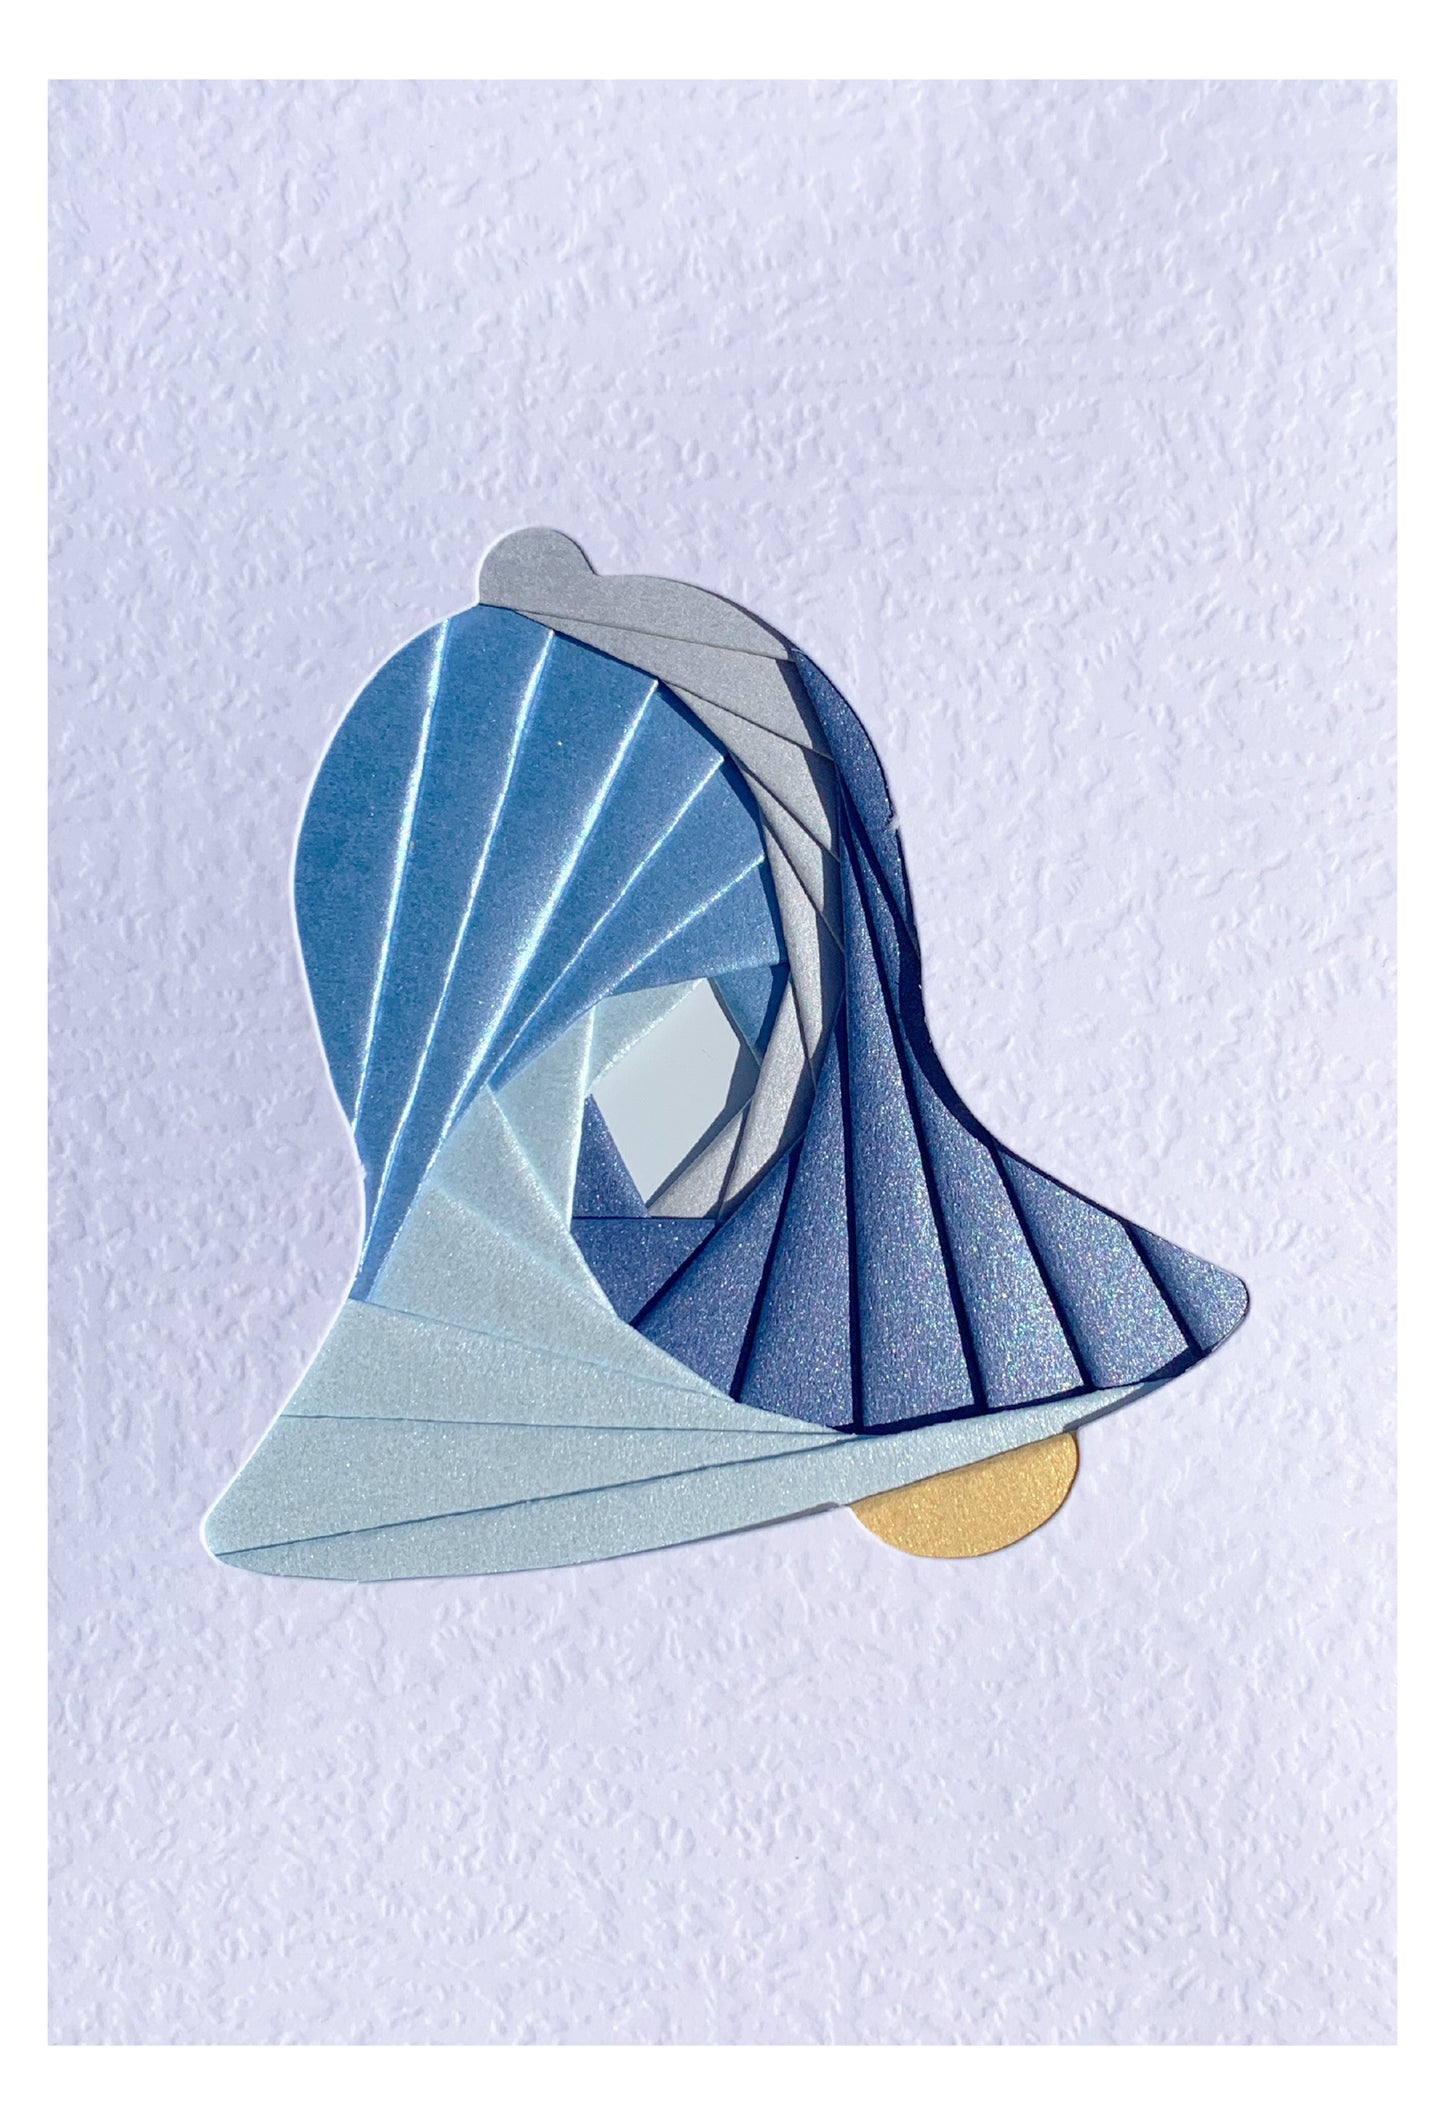 Handmade Bell Iris Fold Card - Blue/Silver Themed